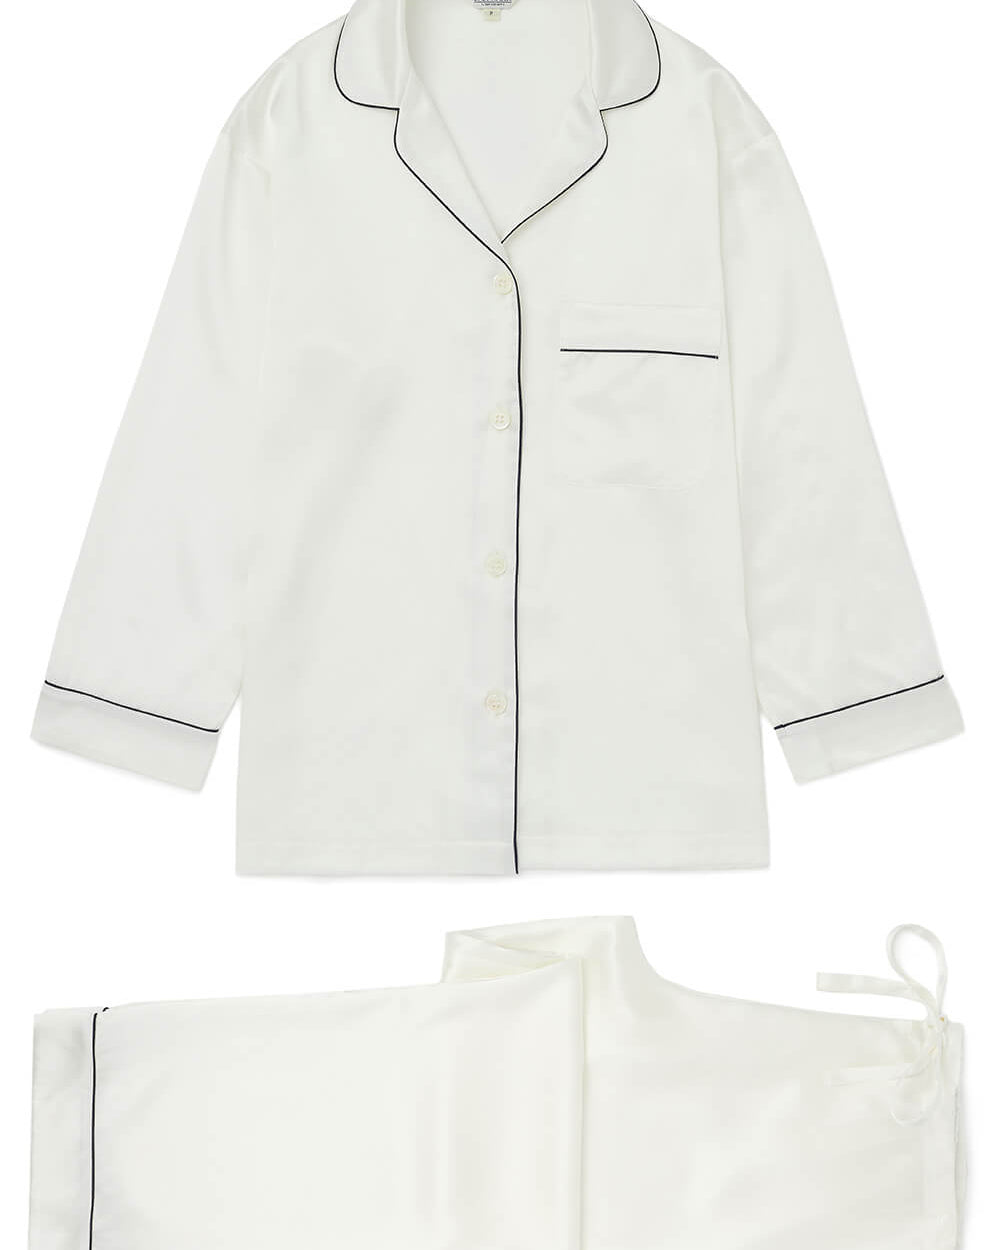 Women's Luxury Silk Ivory Pyjamas | Bonsoir of LondonWomen's Silk Pyjamas - Ivory White Bridal Nightwear | Bonsoir of London